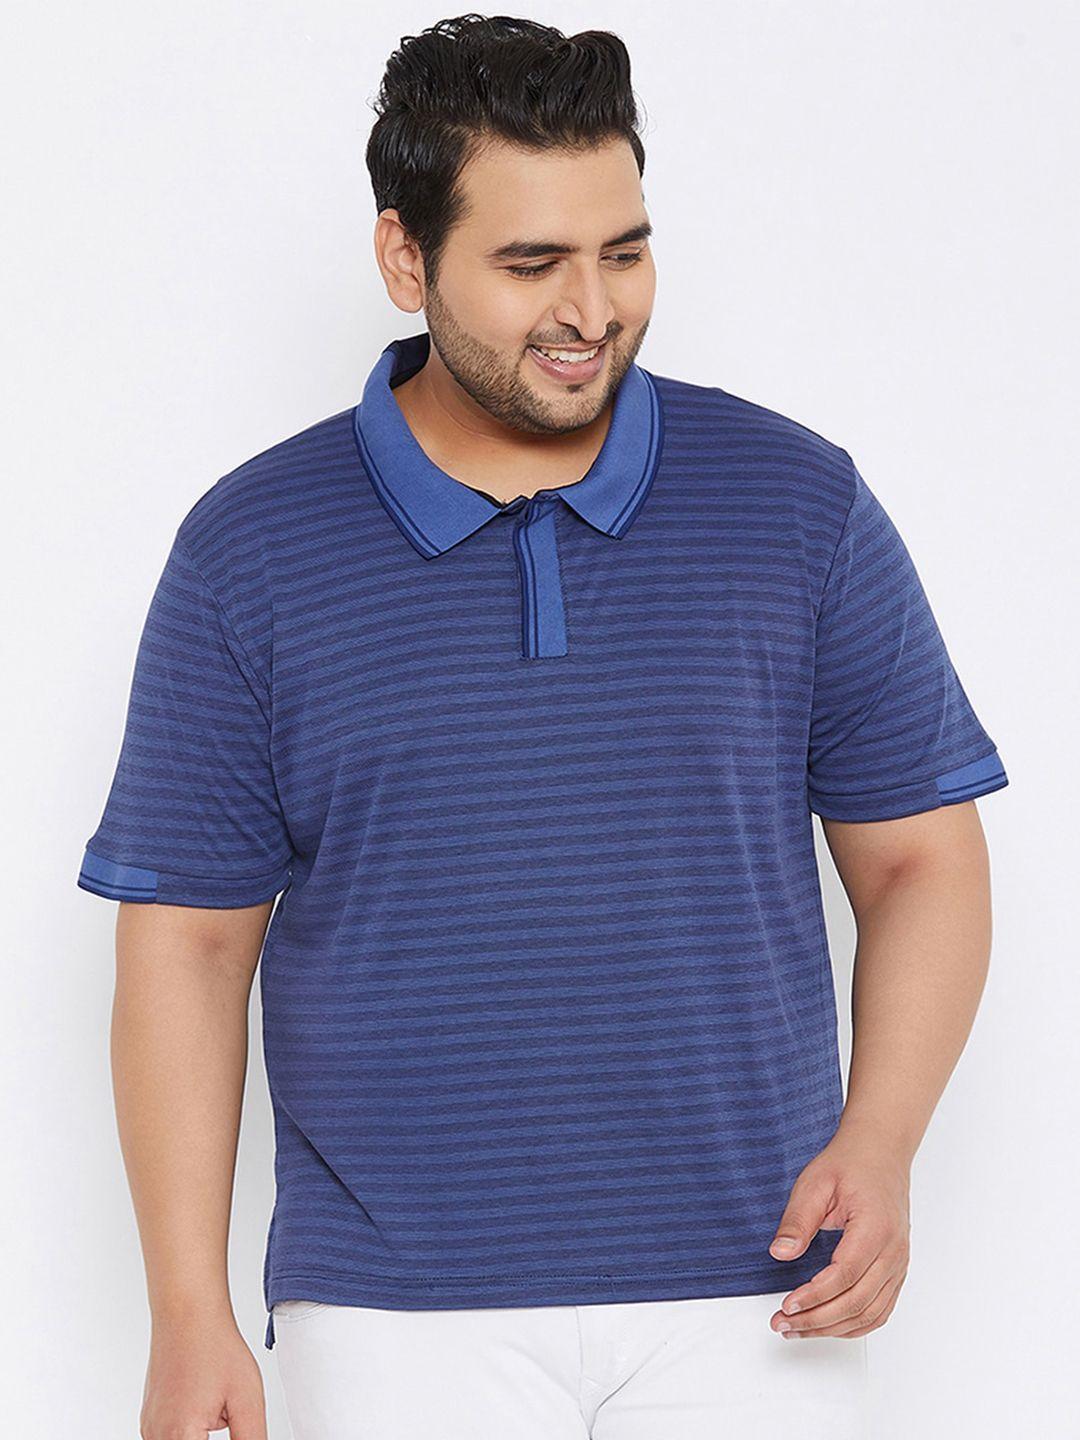 instafab-plus-men-plus-size-cotton-striped-polo-collar-t-shirt